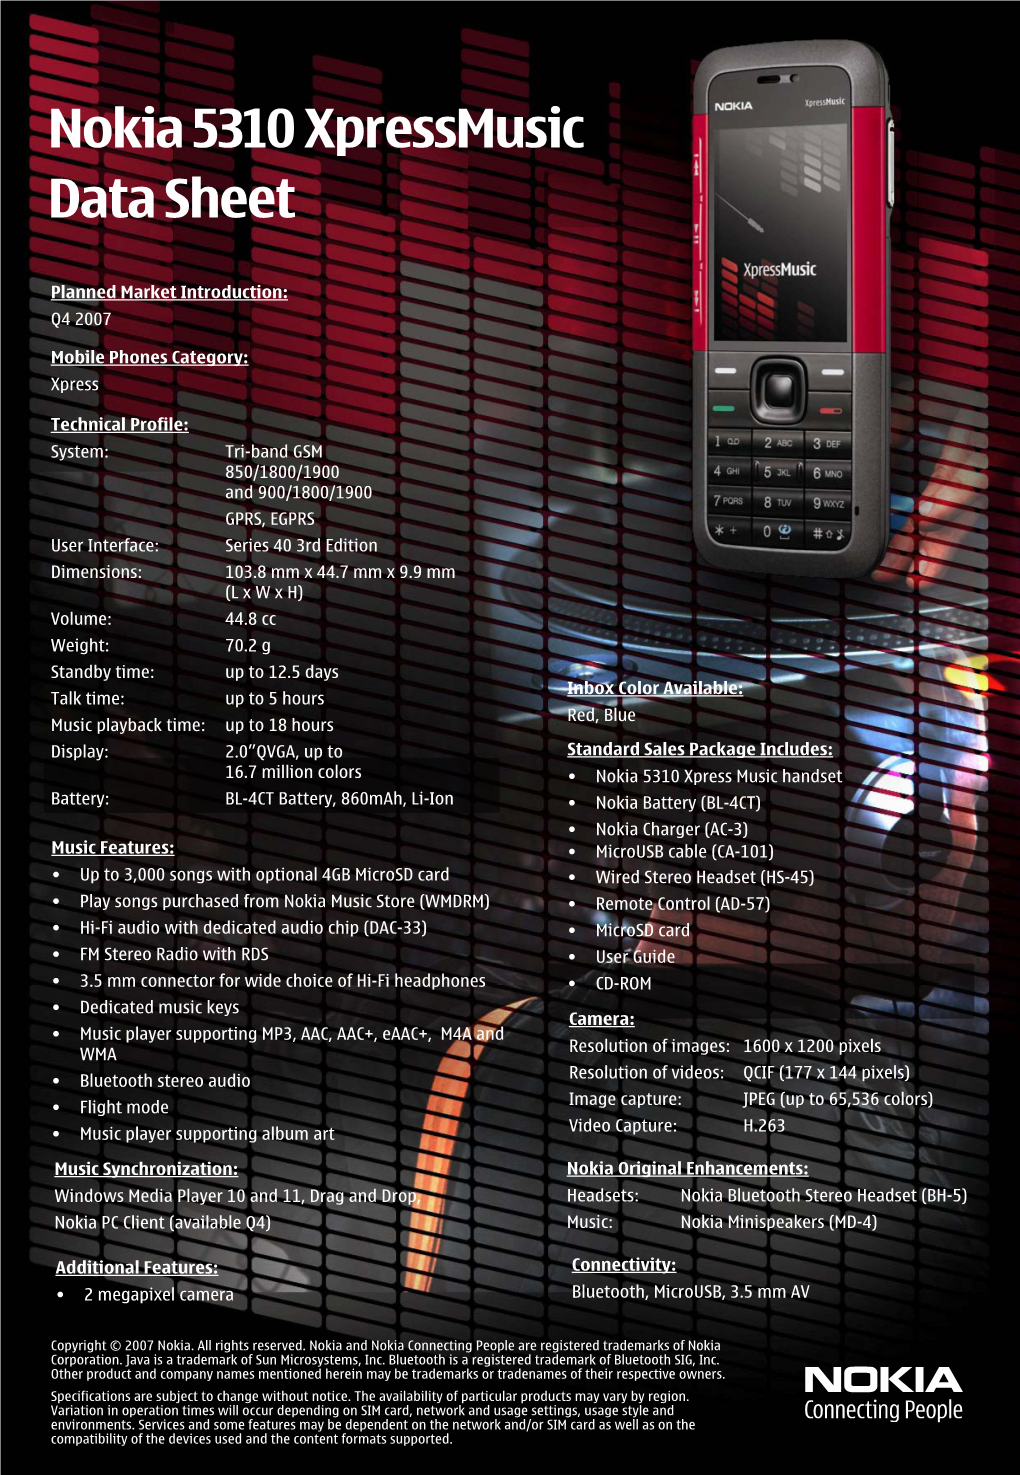 Nokia 5310 Xpressmusic Data Sheet